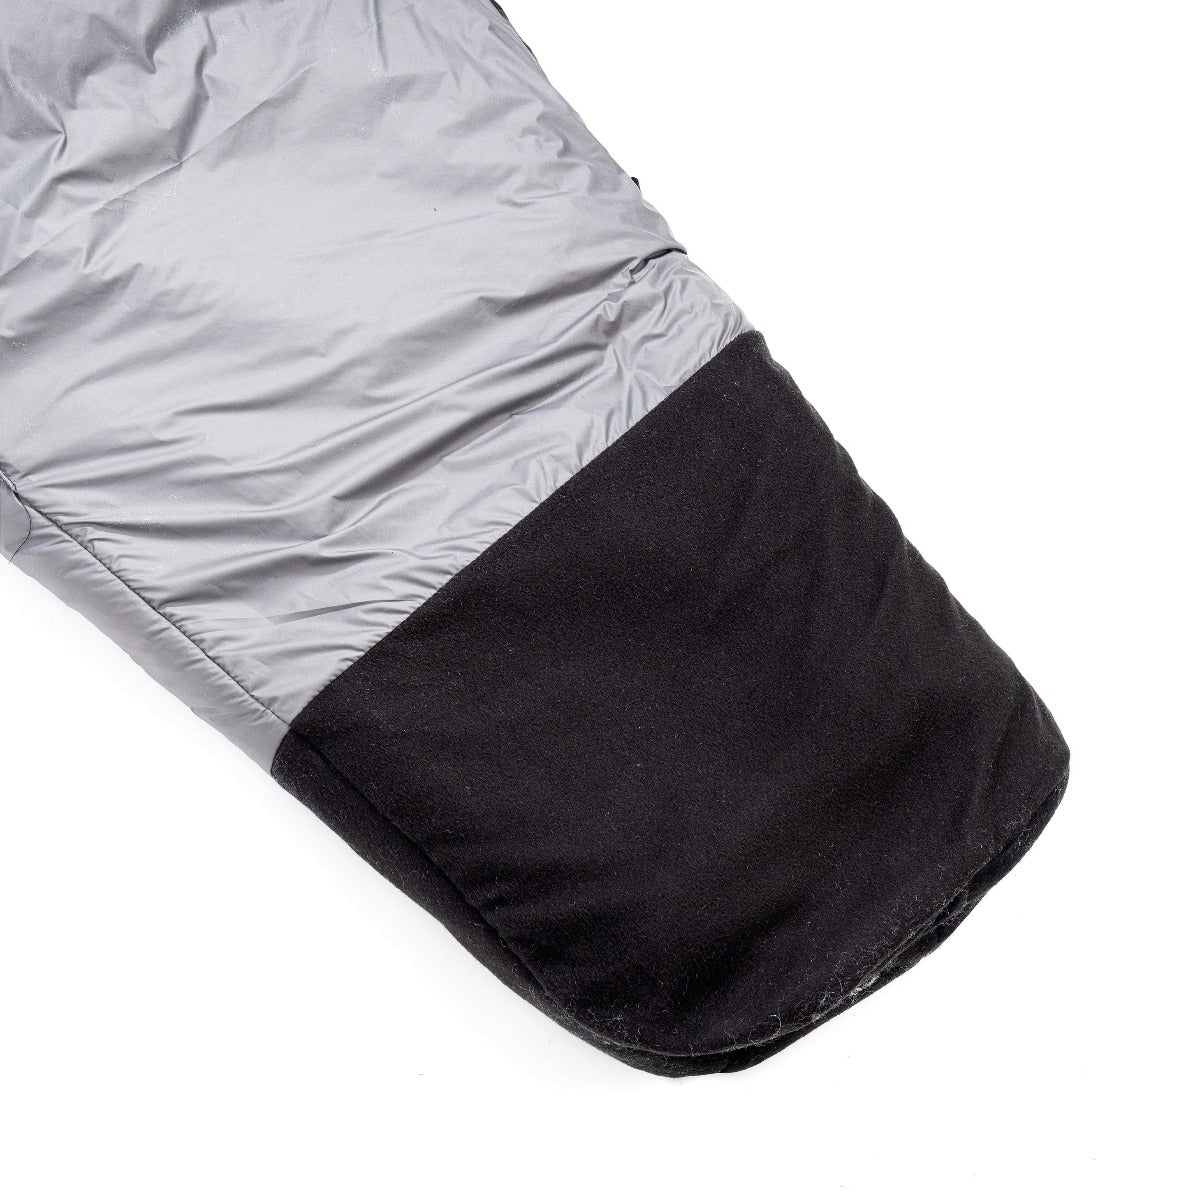 Shivalik Series -10°C Comfort Sleeping Bag - Black 6